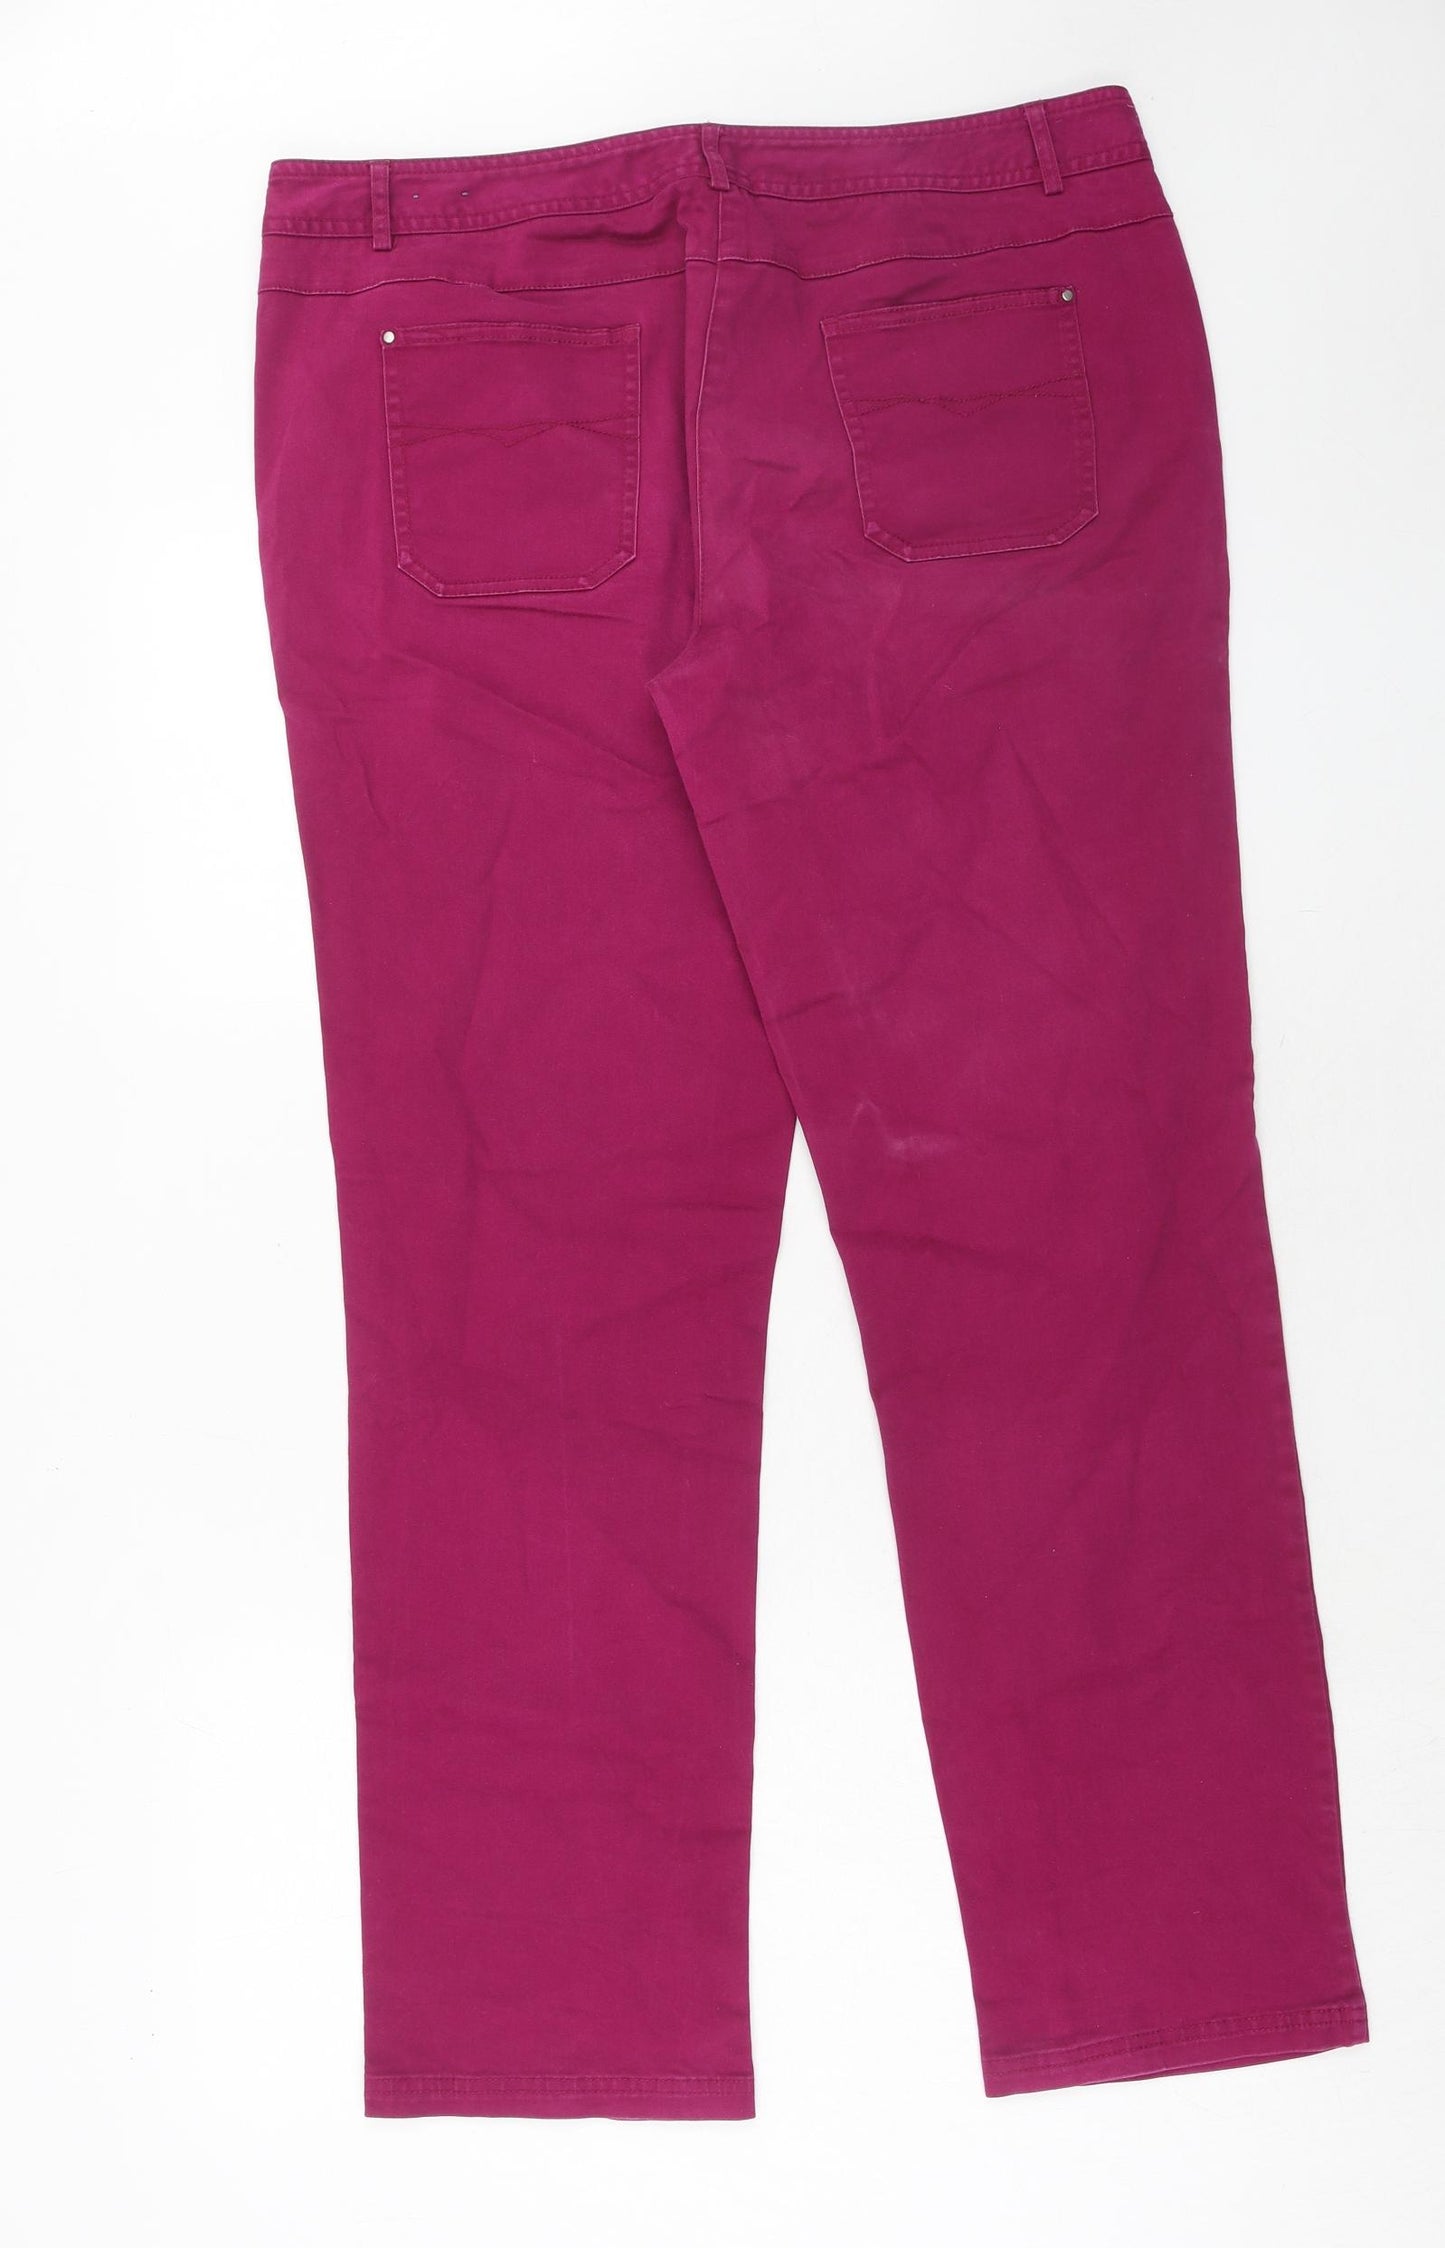 Laura Ashley Womens Purple Cotton Straight Jeans Size 16 Regular Zip